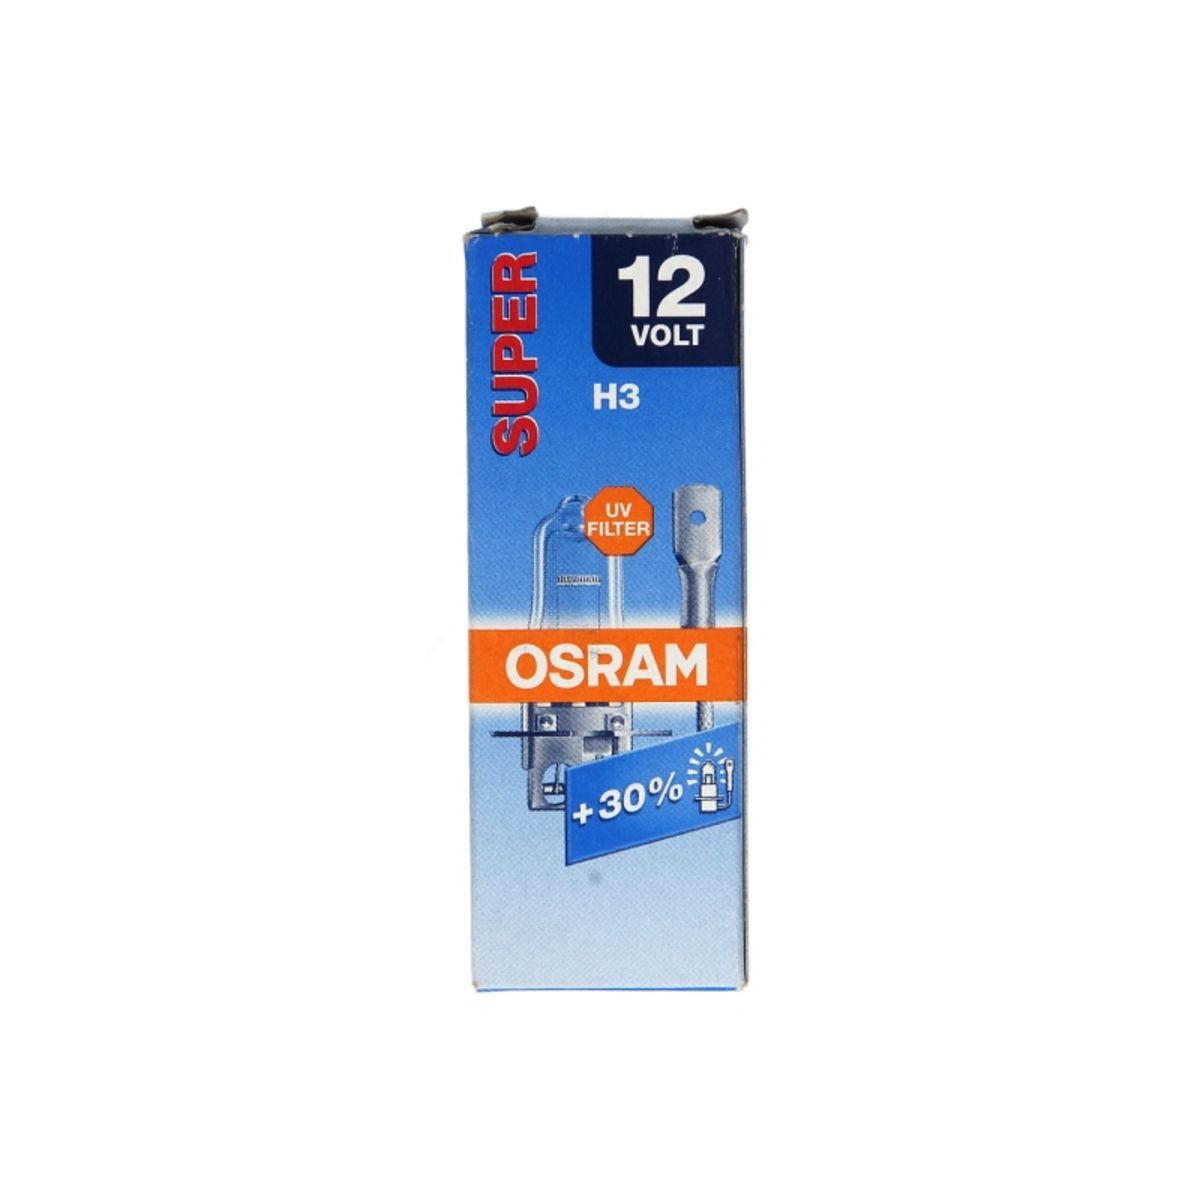 Osram Lampada alogena H3 Super Plus 30% 12V, 55W